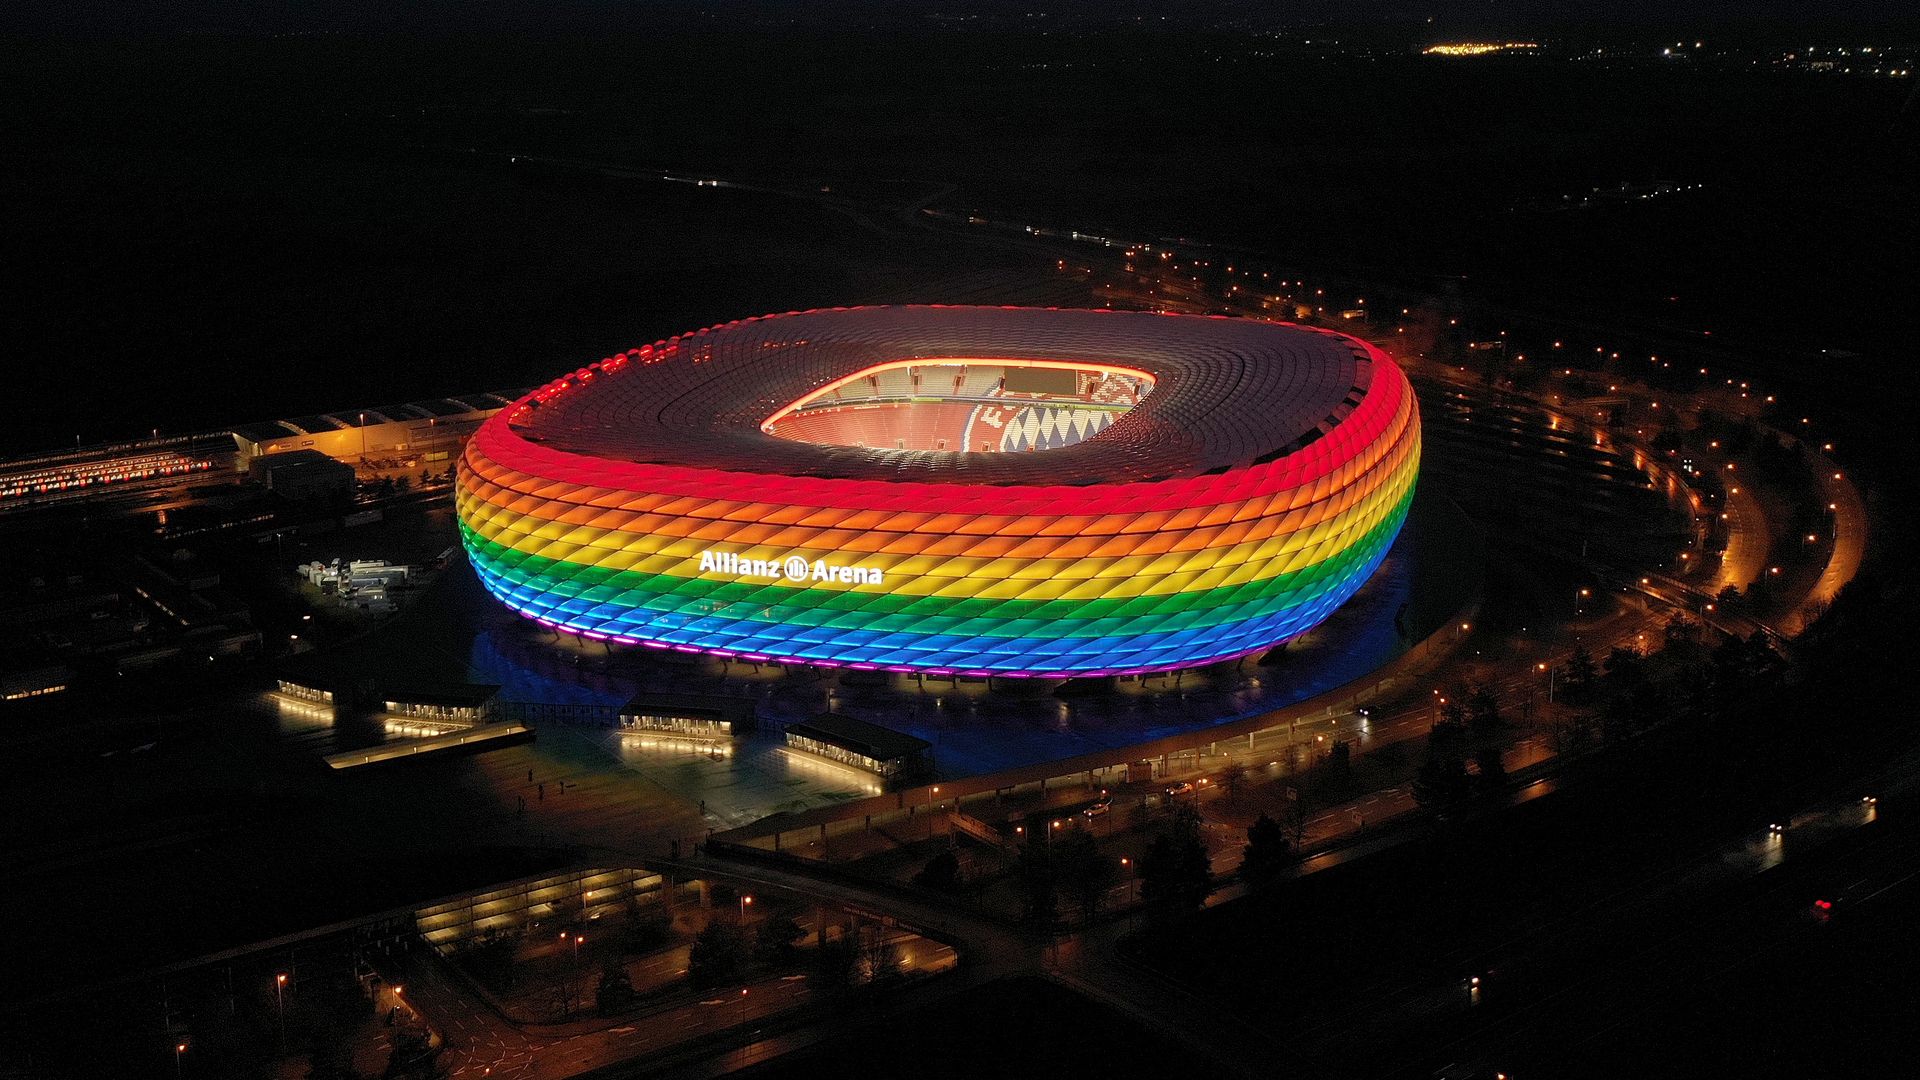 The Allianz arena